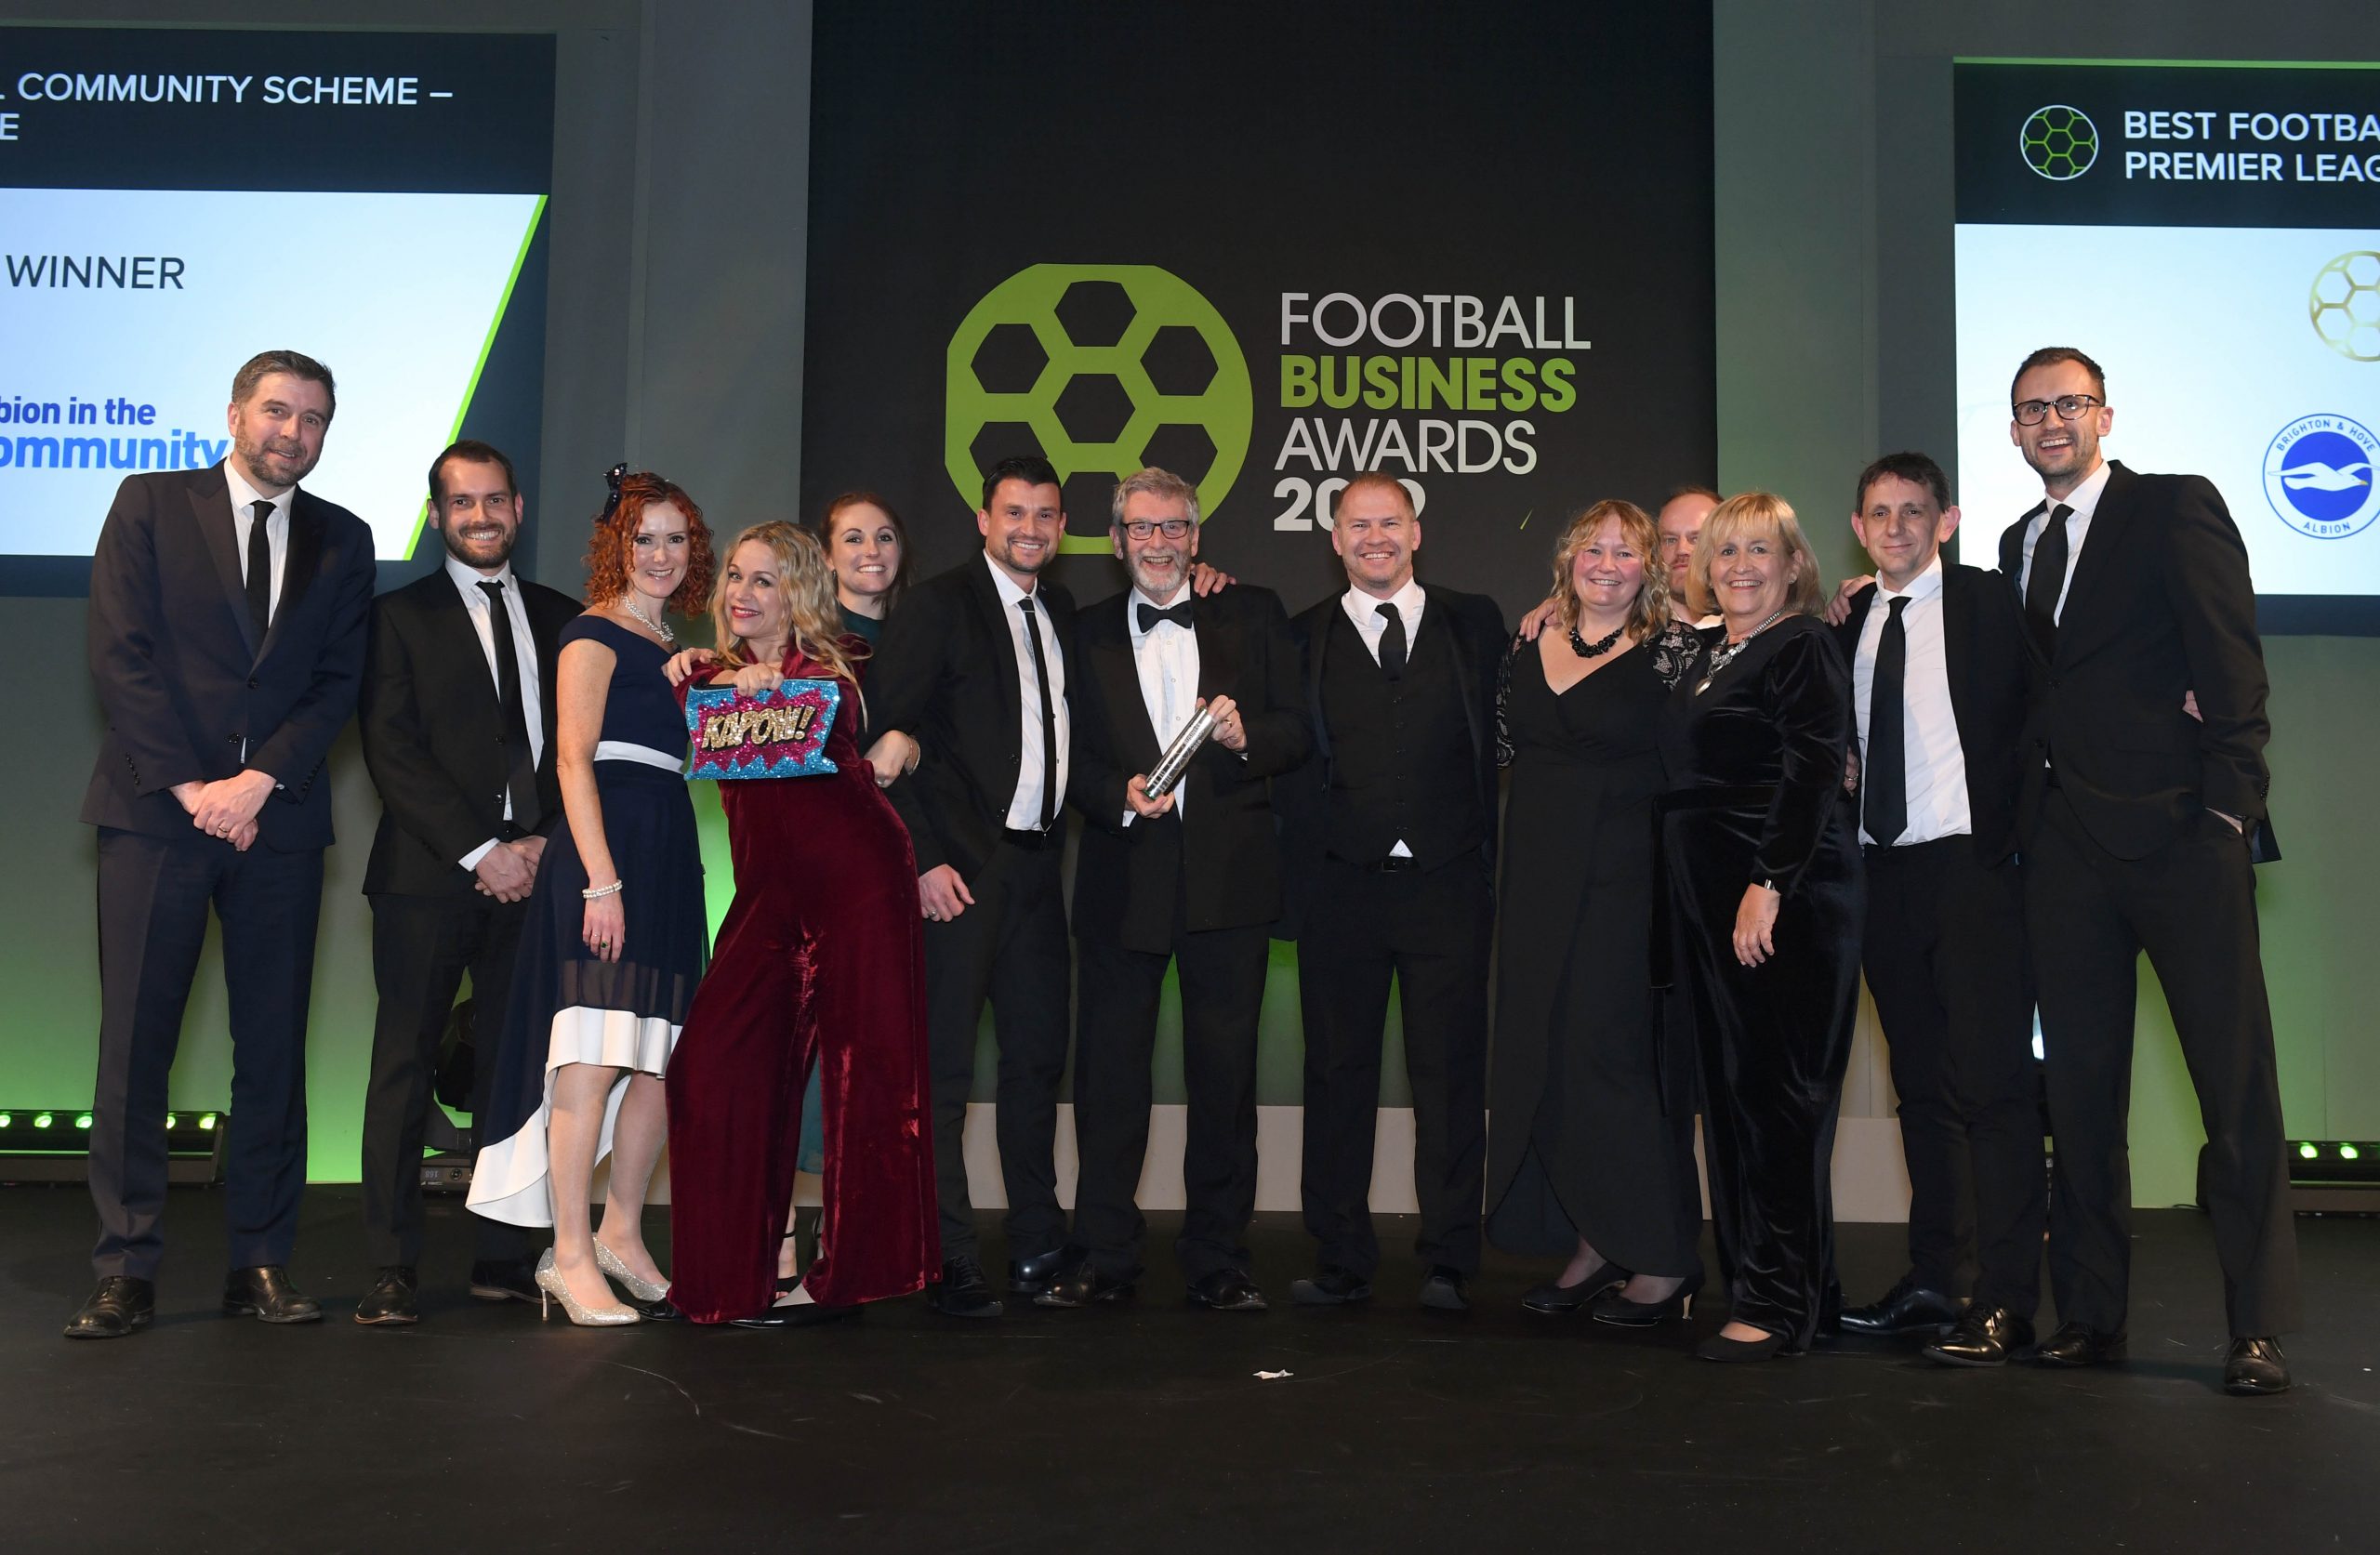 AITC win Best Football Community Scheme award